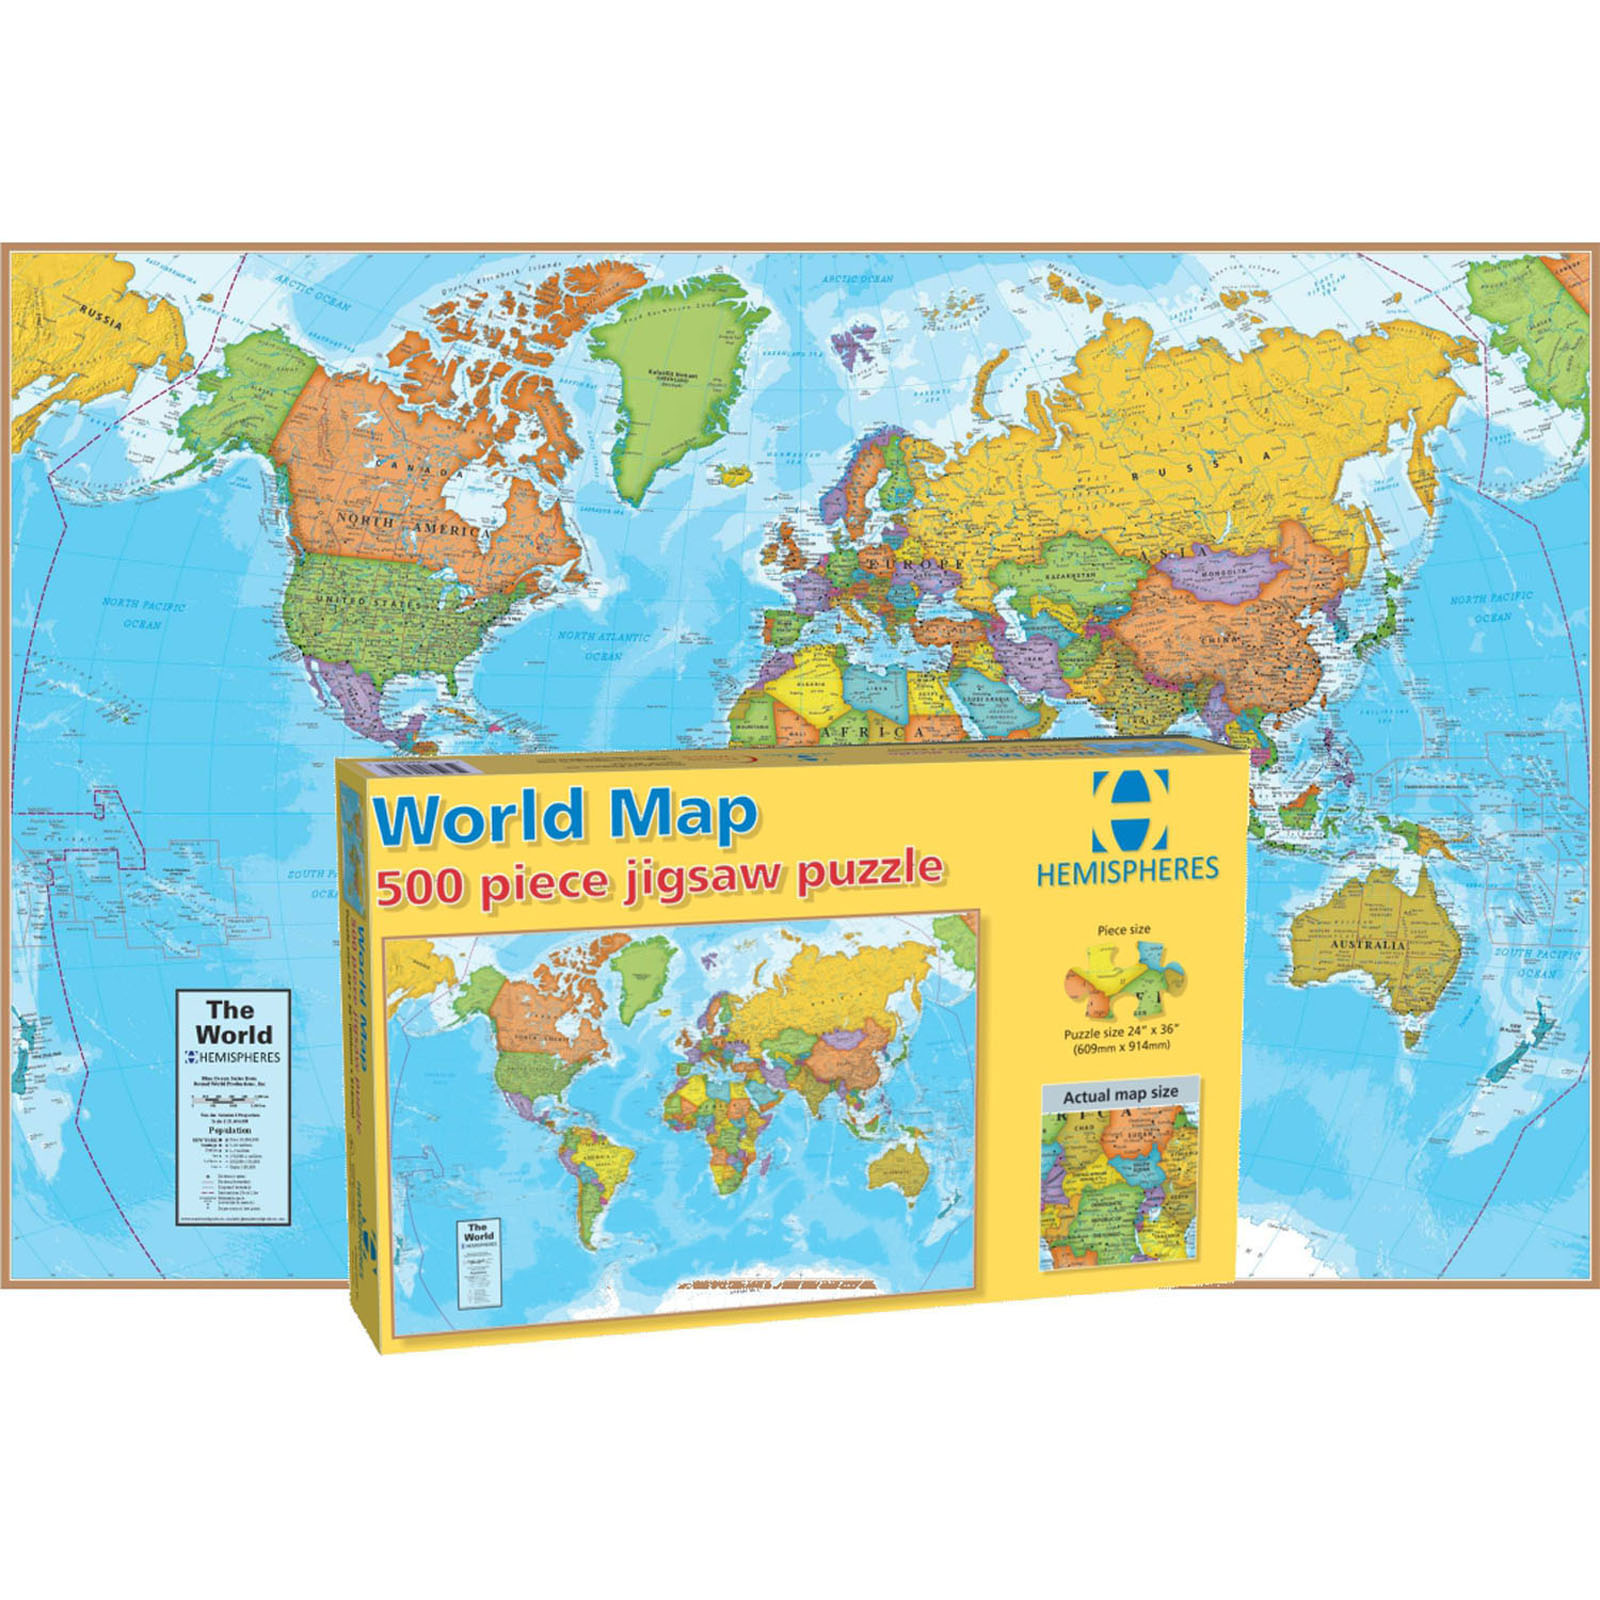 Round World Products World Map 500 Piece 24" x 36" Jigsaw Puzzle